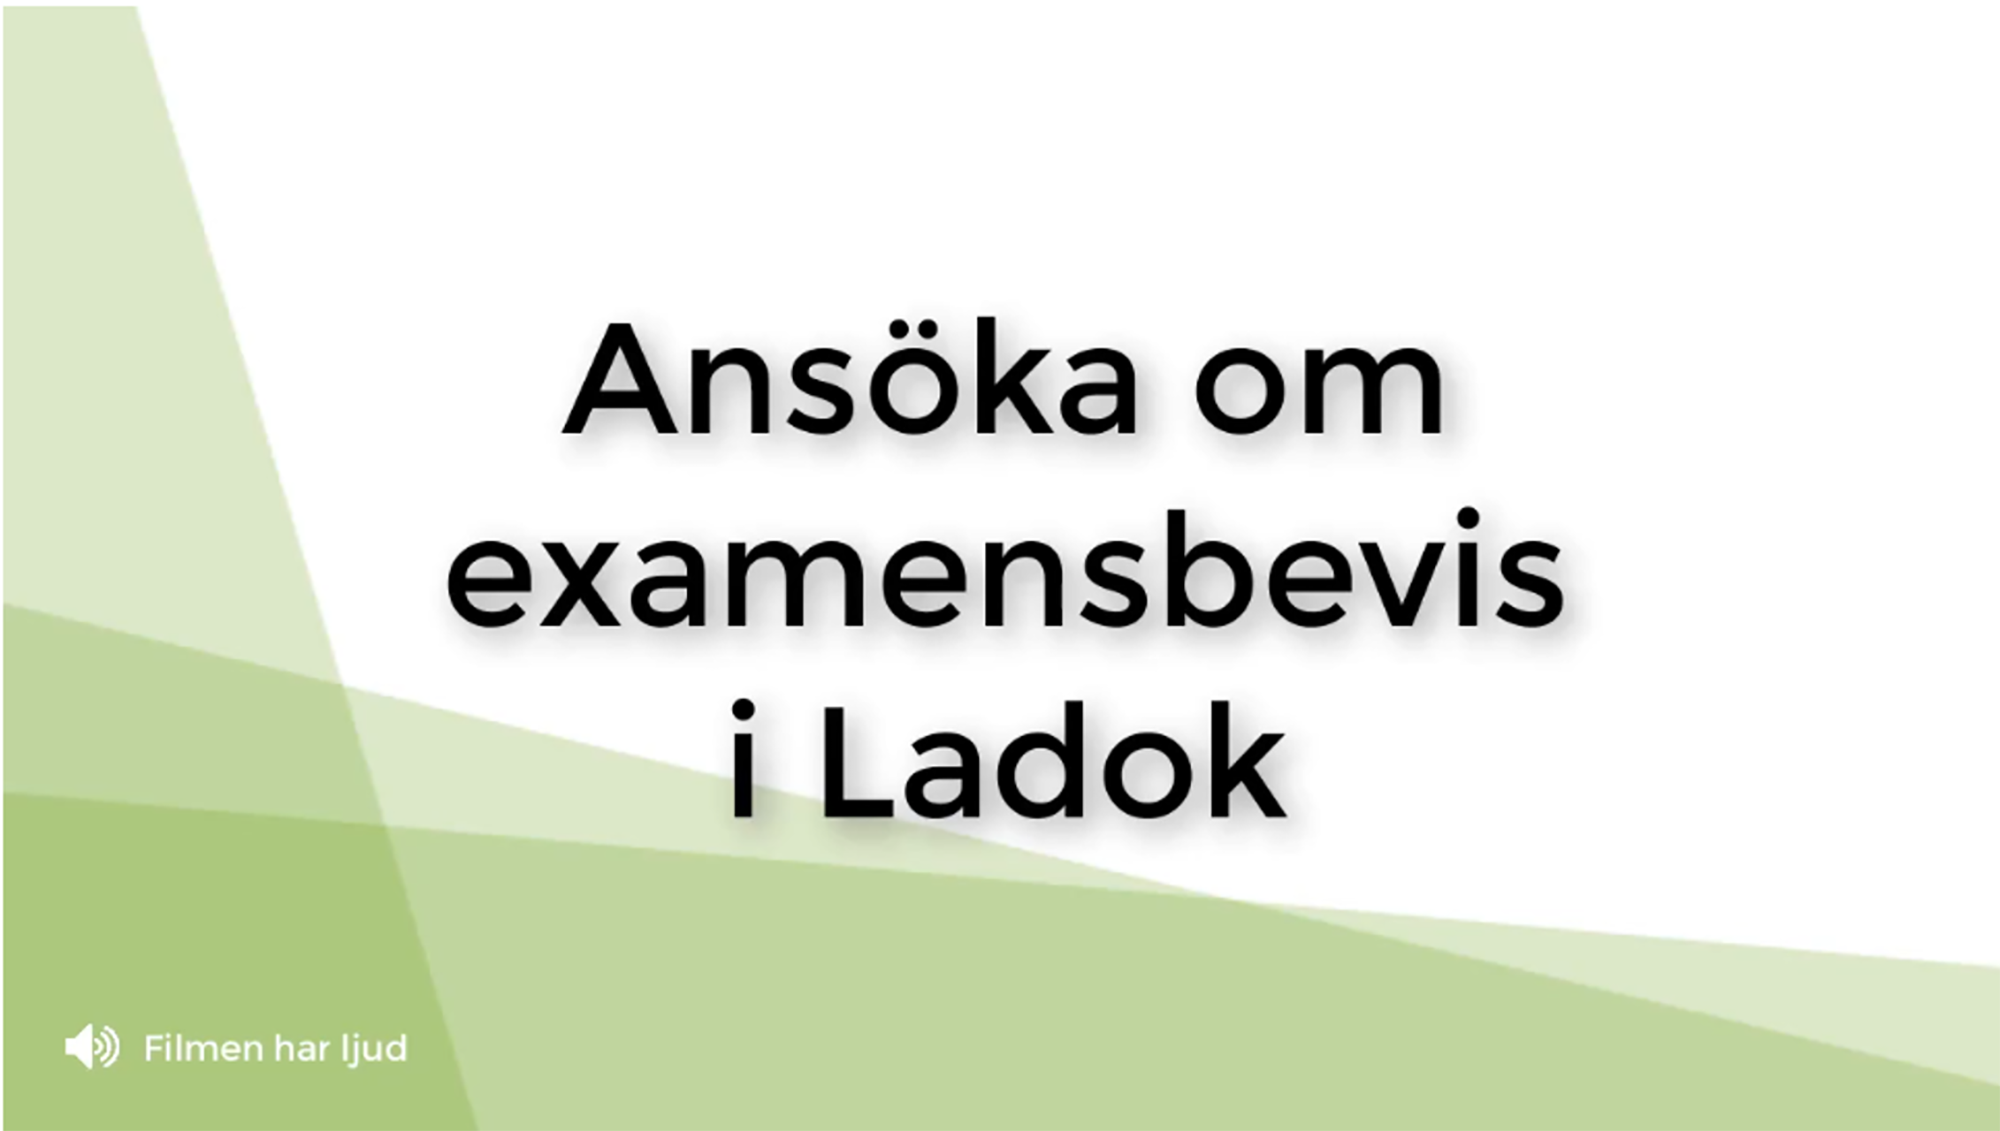 Ansöka om examensbevis i Ladok